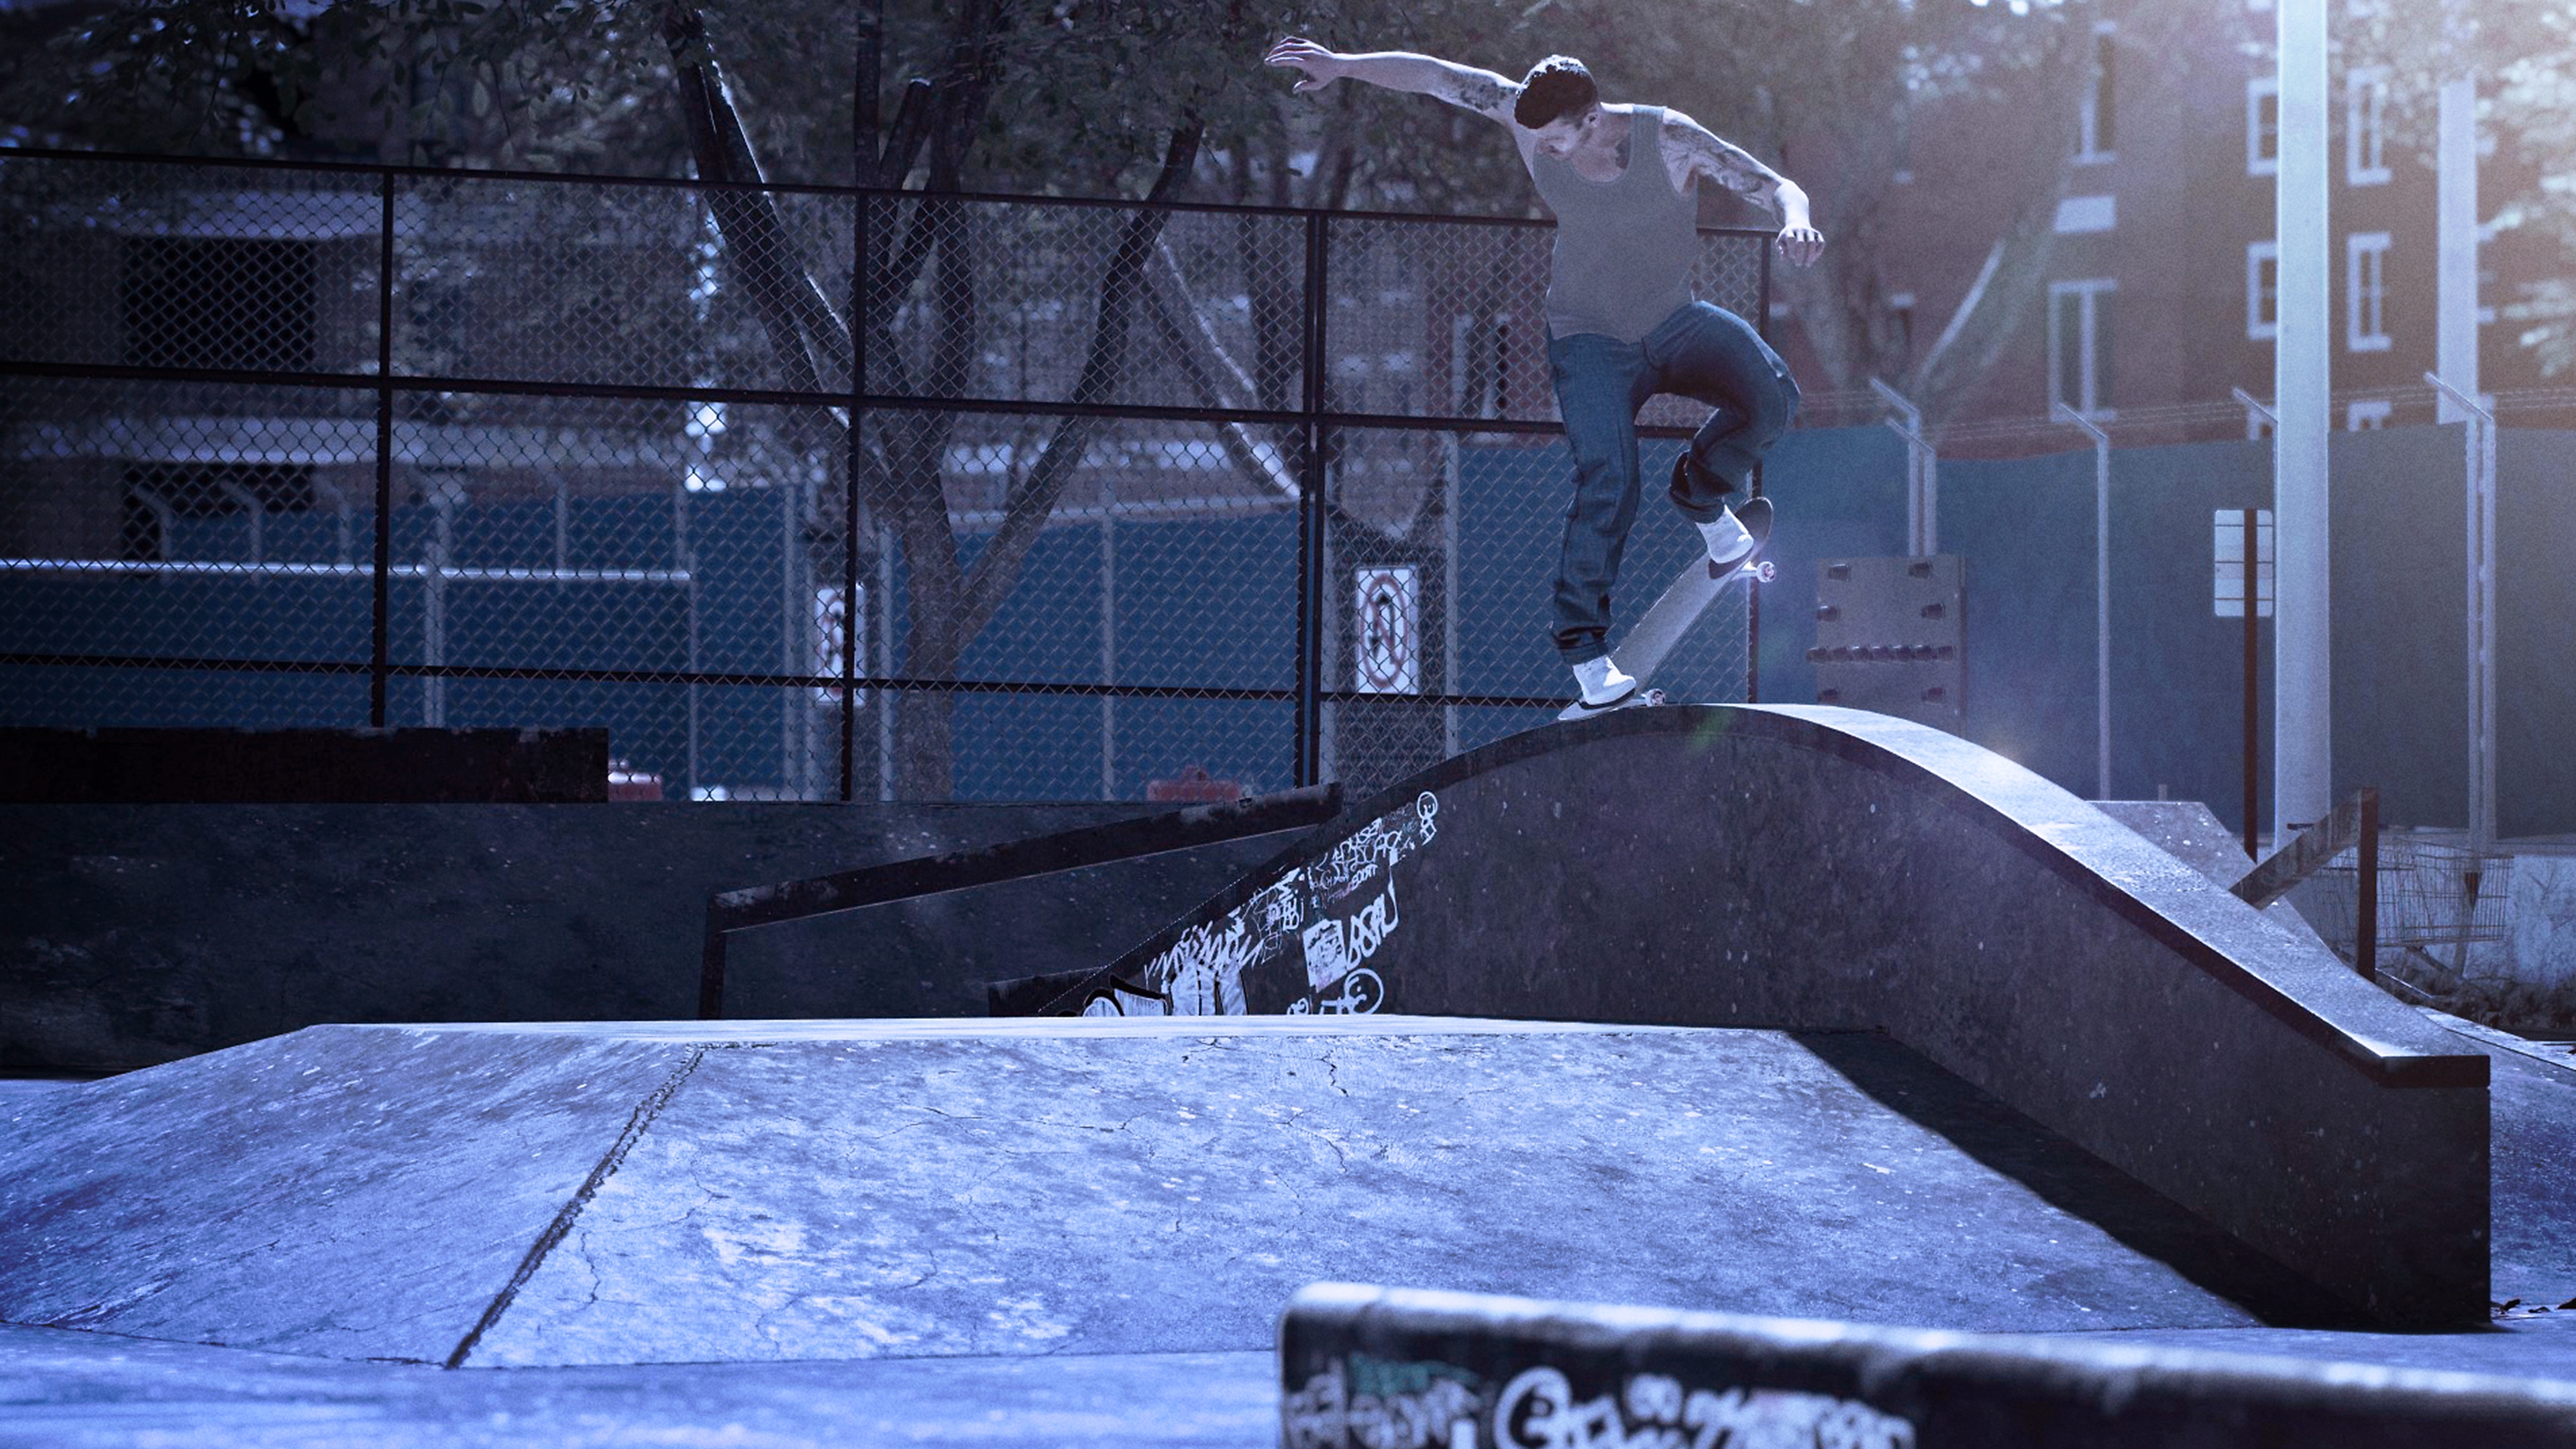 Session: Skate Sim screenshot showing a skater grinding a ledge